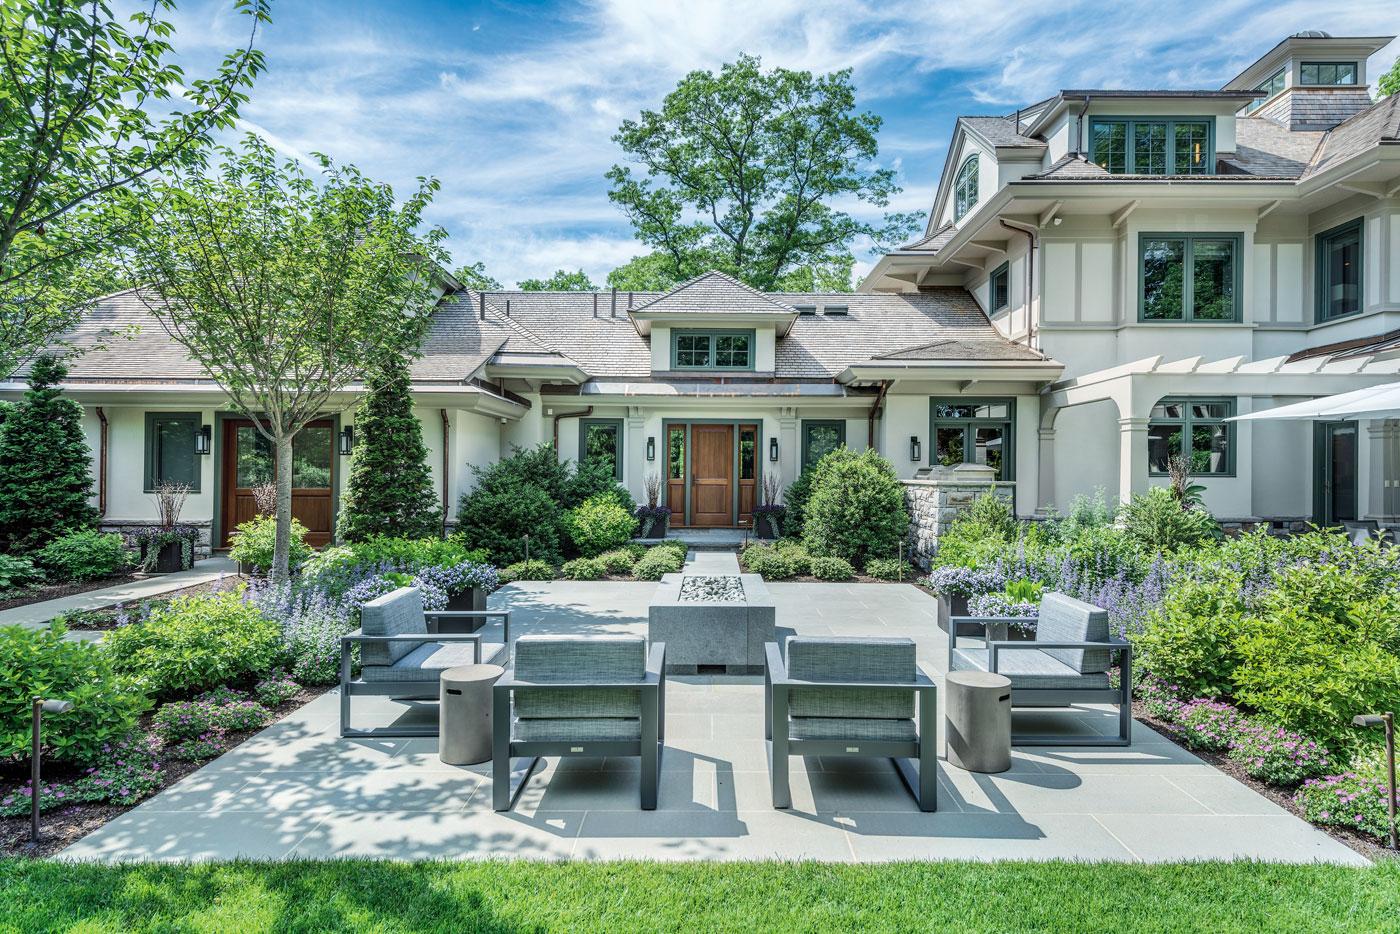 Custom patio for outdoor living in a high-end Boston home designed by 莫尔豪斯麦克唐纳公司 由桑福德定制建筑公司建造.